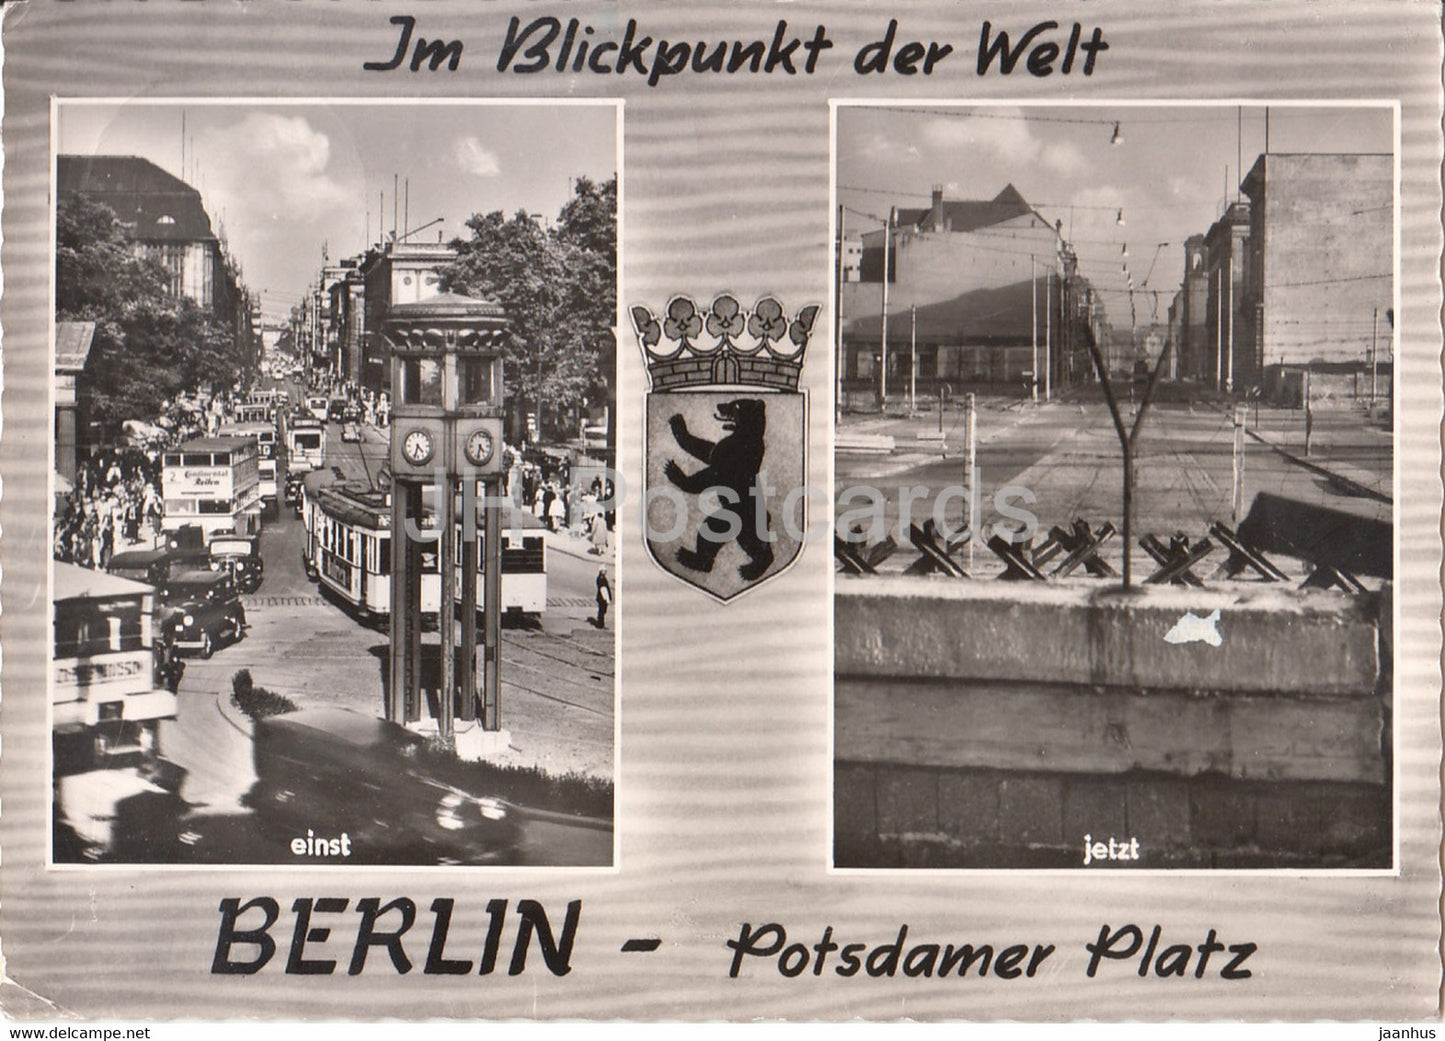 Berlin - Im Blickpunkt der Welt - Potsdamer Platz - tram - Germany - used - JH Postcards